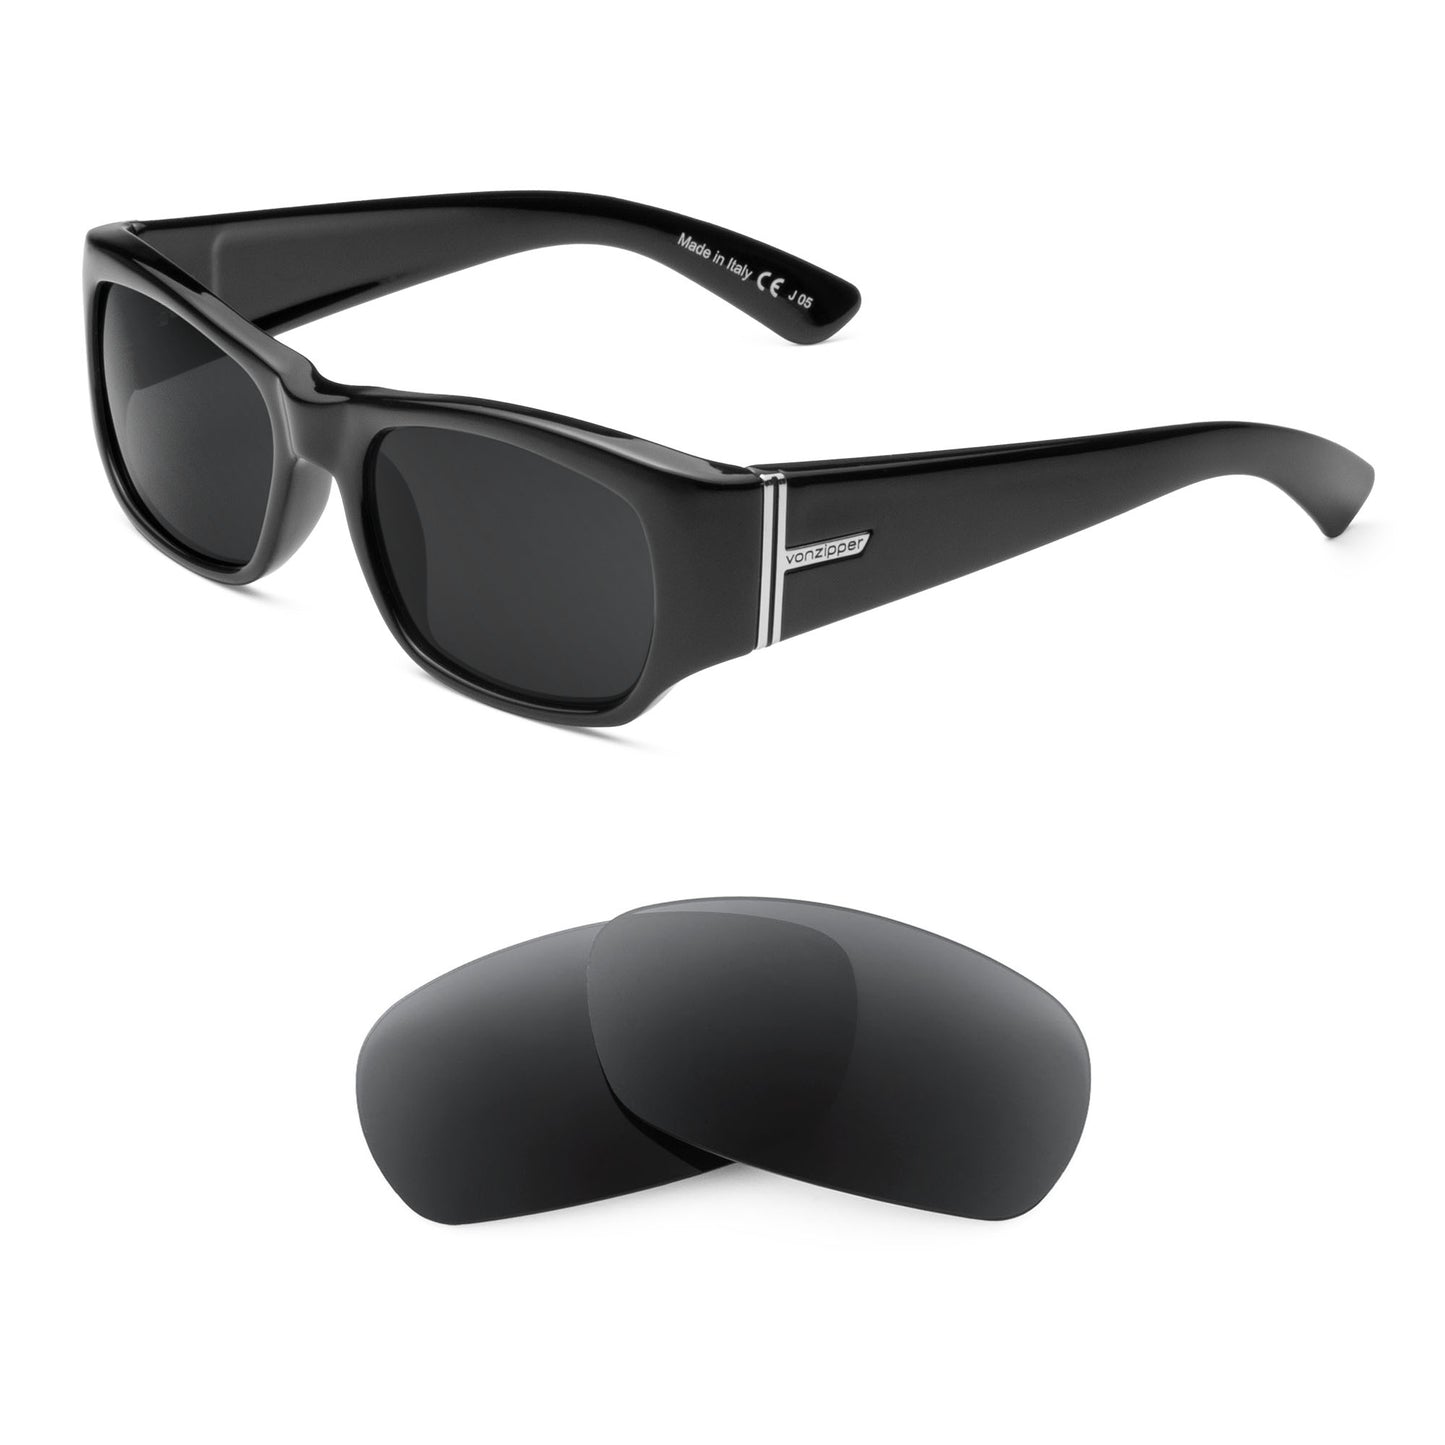 VonZipper Juvie sunglasses with replacement lenses